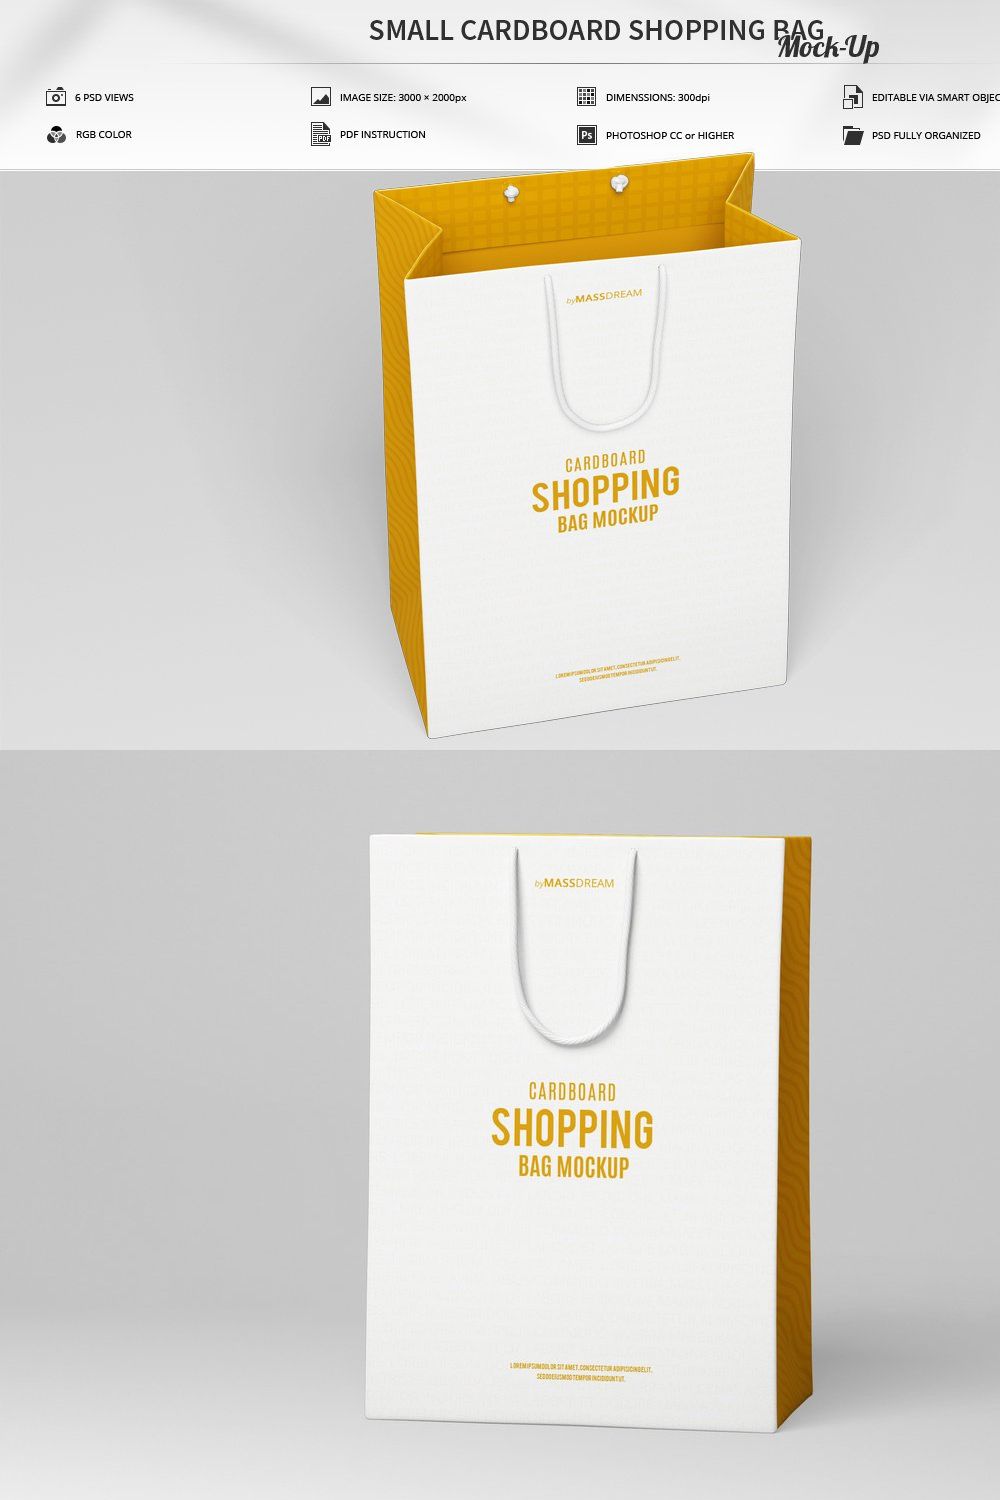 Small Cardboard Shopping Bag Mock-U pinterest preview image.